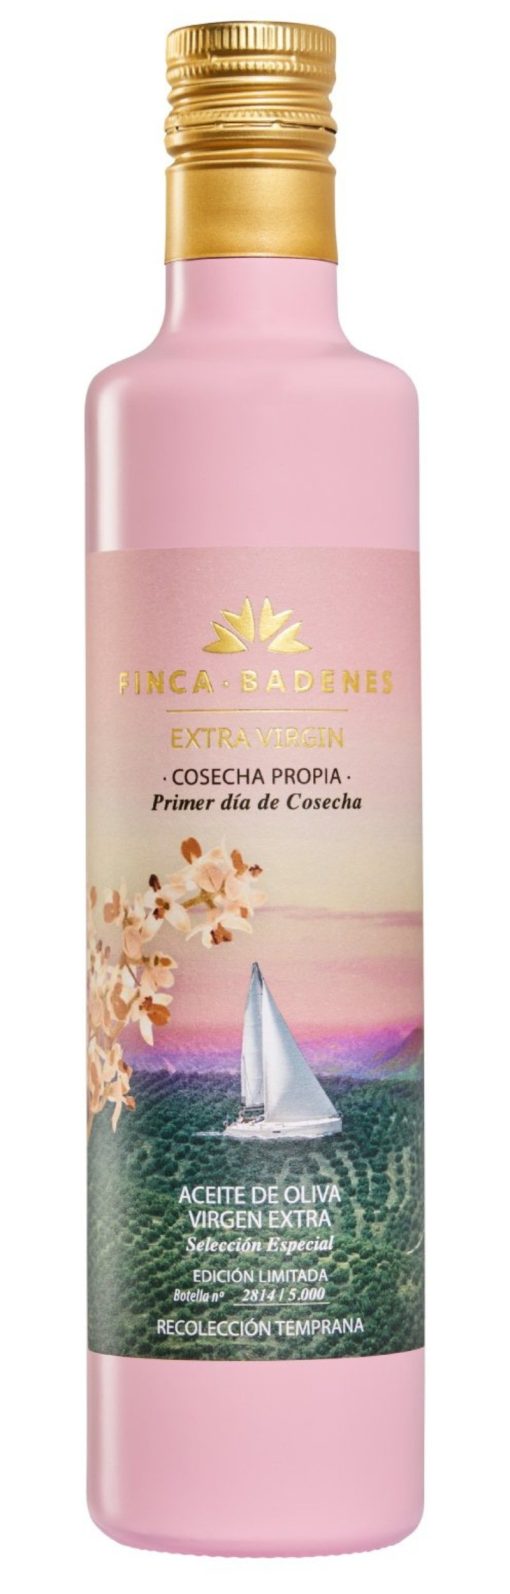 Aceite de Oliva Virgen Extra coupage tres variedades Finca Badenes Aires de Jaen 500 ml ST 01 1678889170